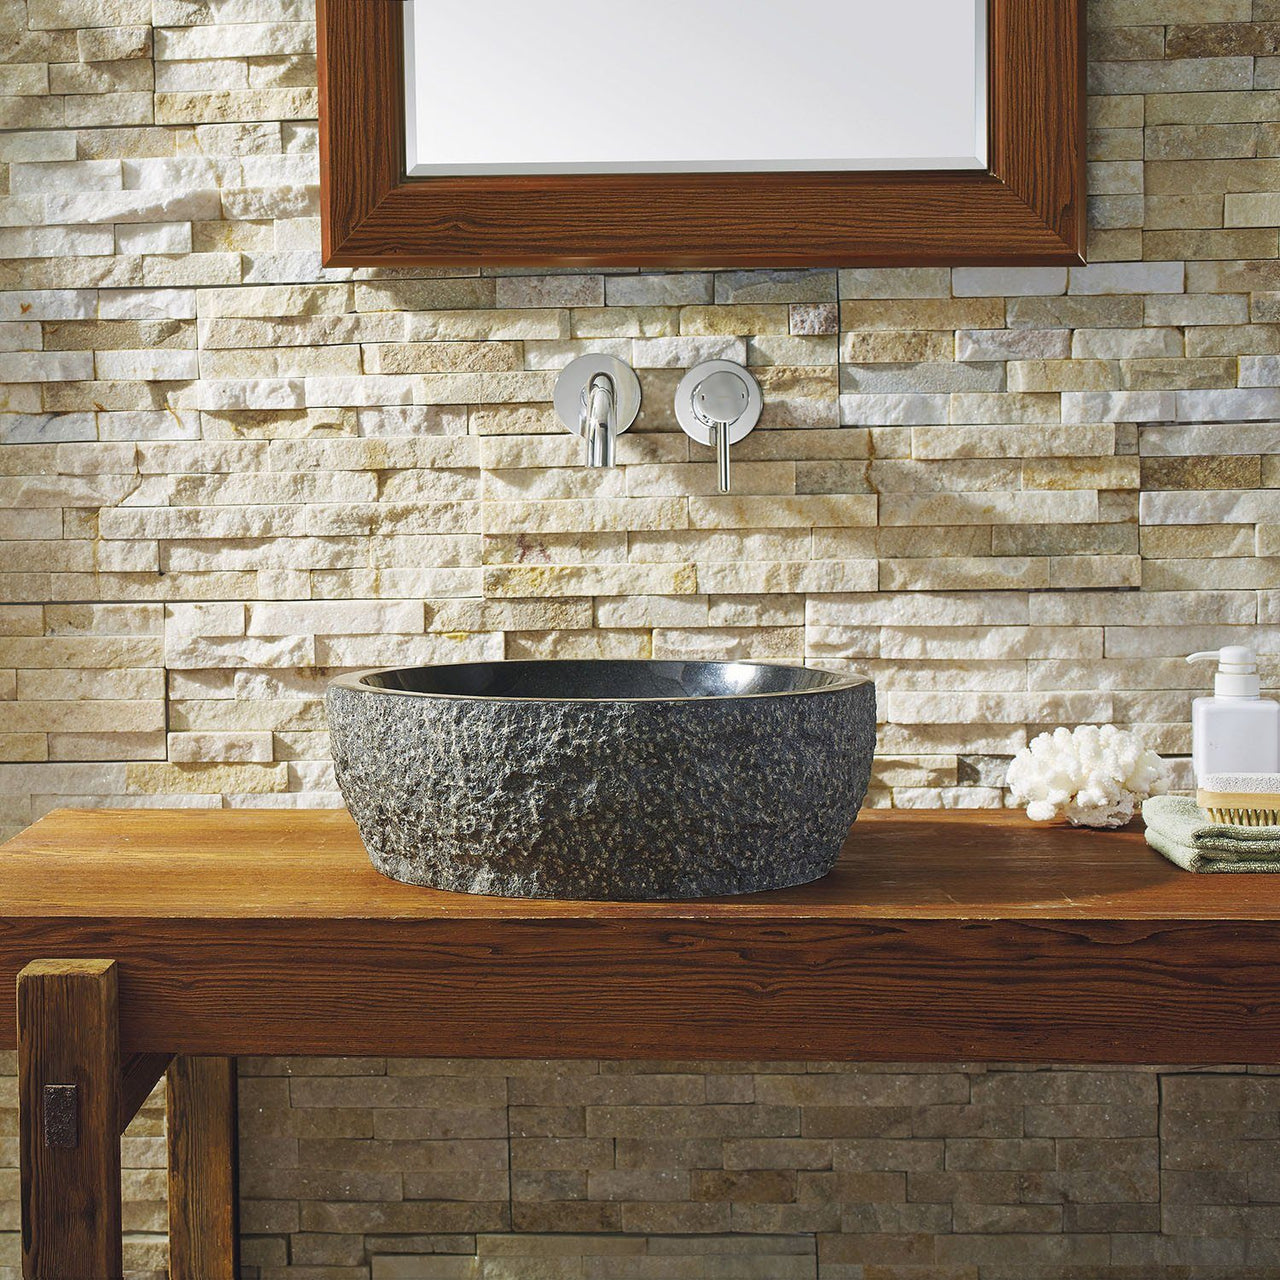 Virtu USA Melia Natural Stone Bathroom Vessel Sink in Shanxi Black Granite Bathroom Sink Virtu USA 